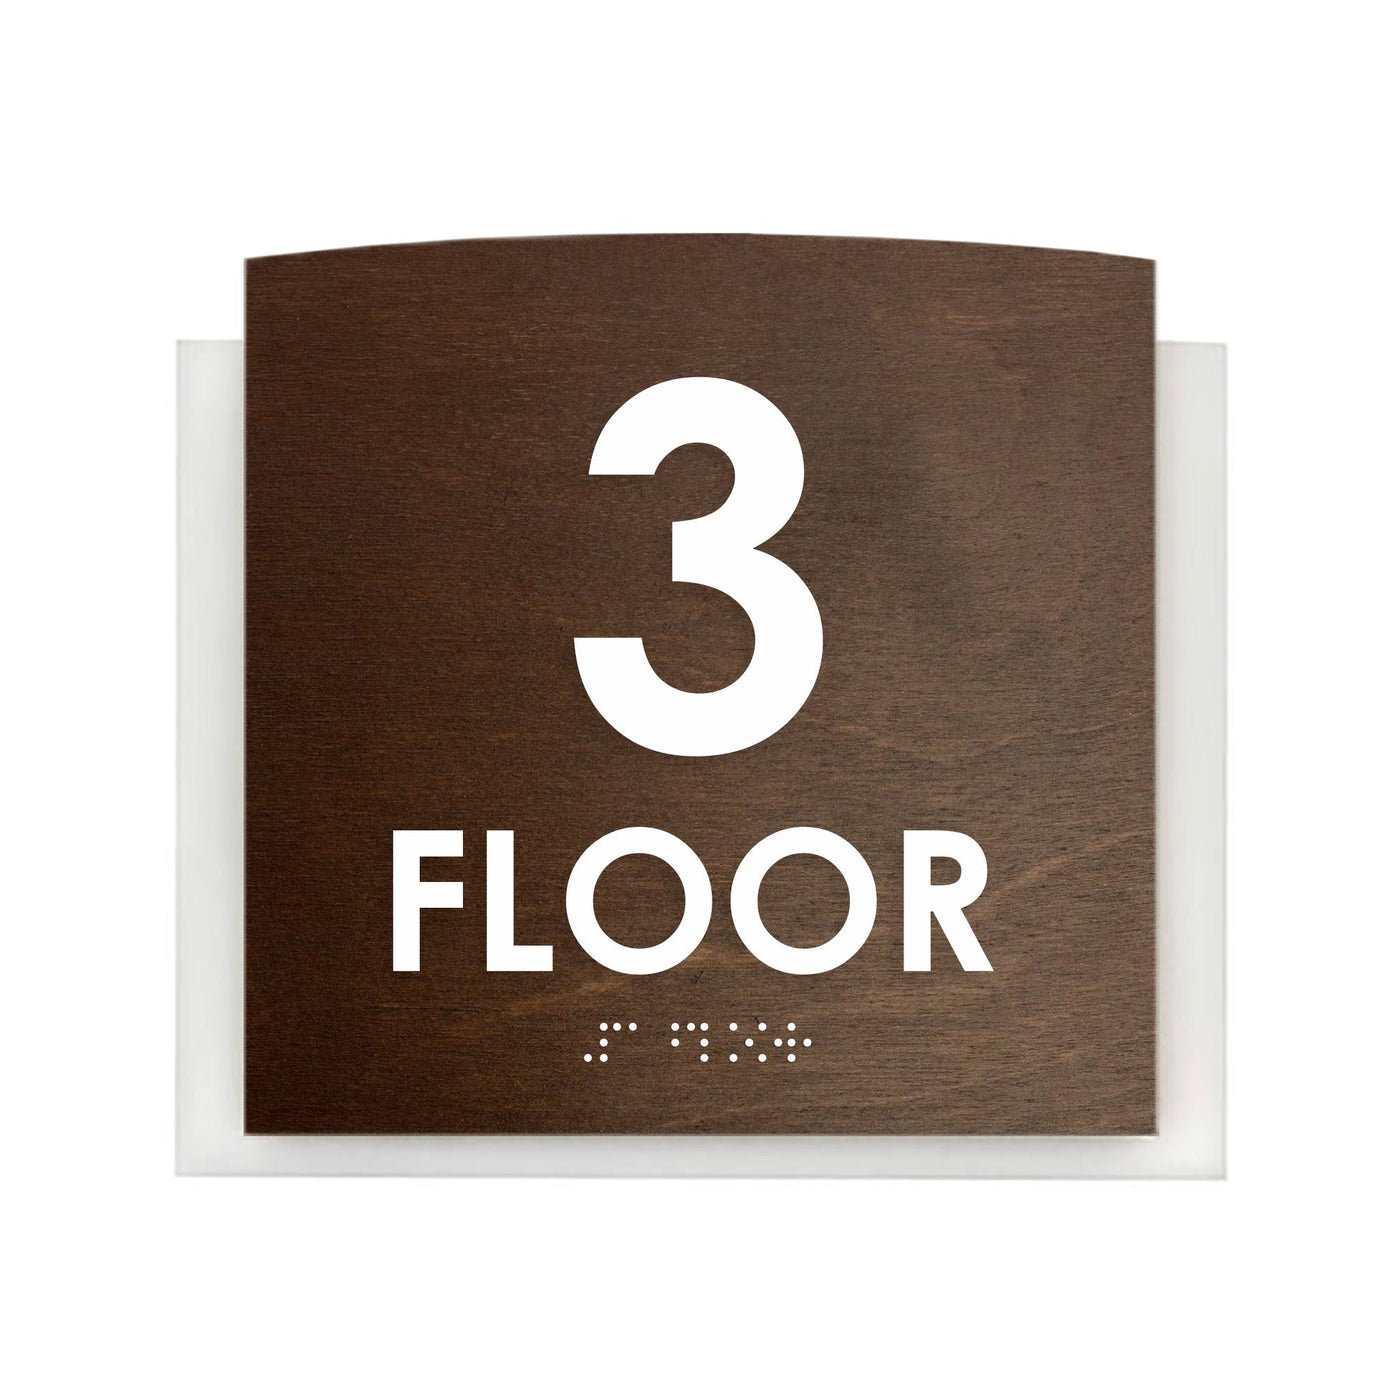 Floor Signs - 3rd Floor Sign "Scandza" Design